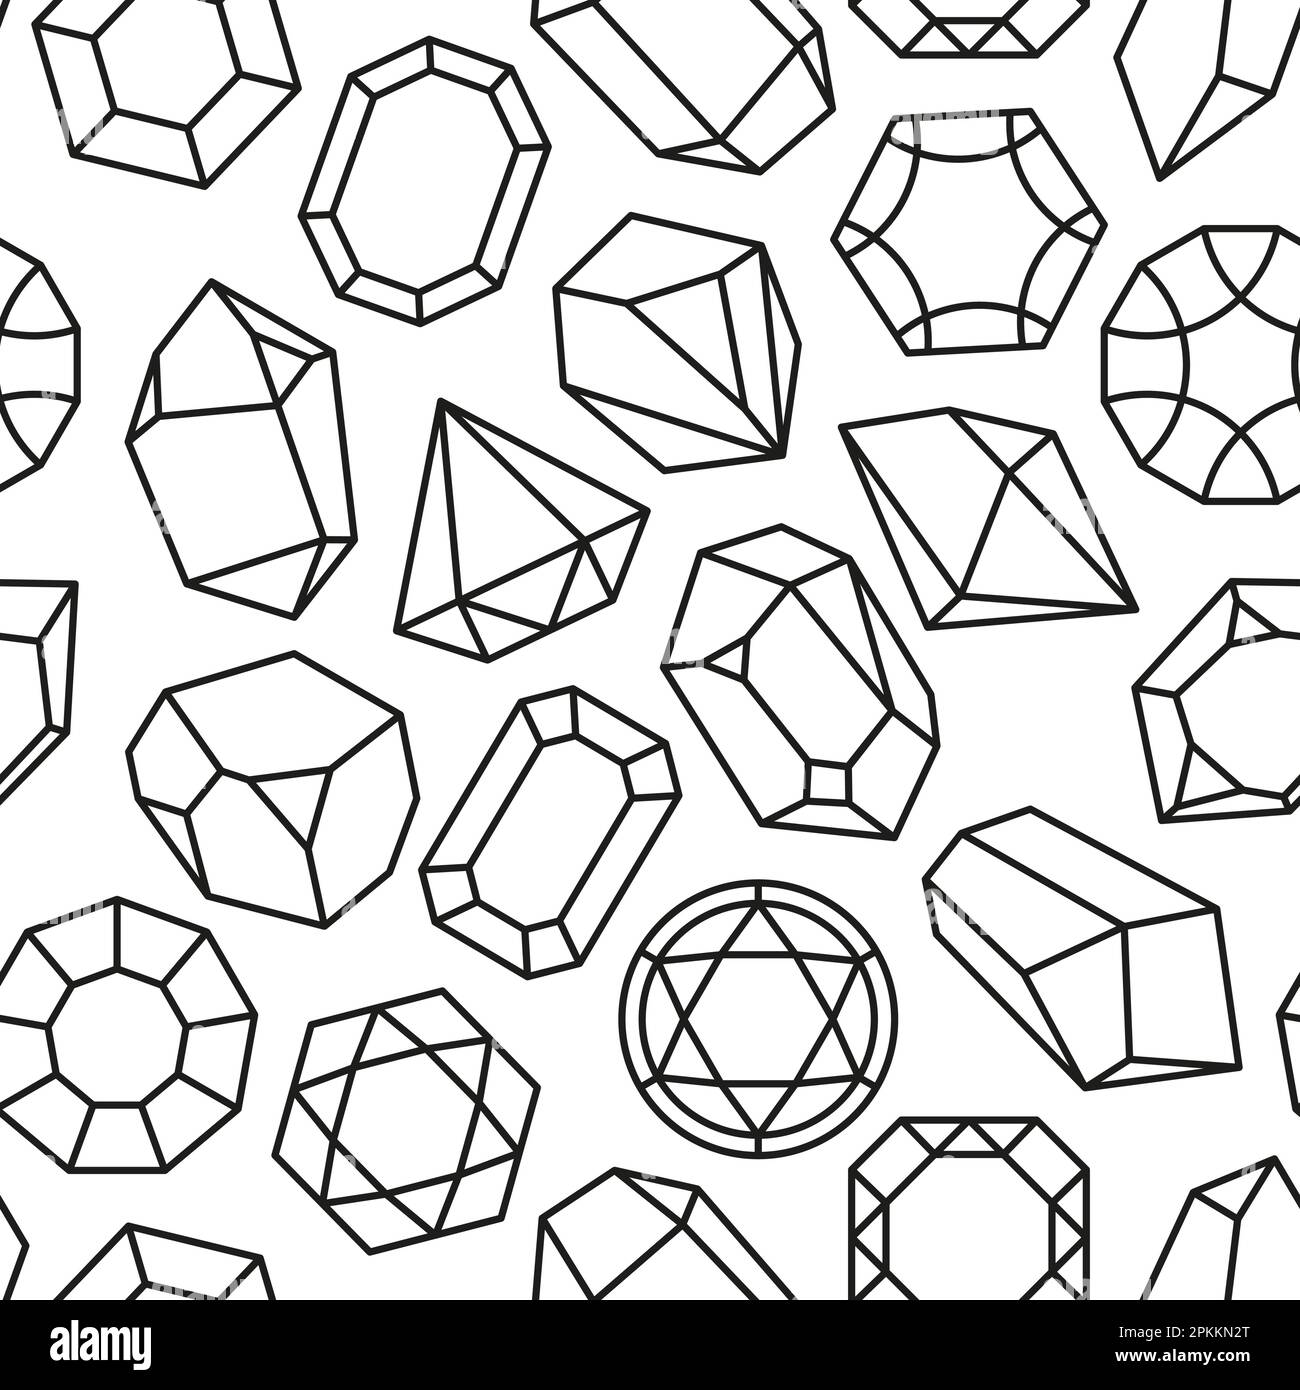 Vertical 2D illustration of a seamless diamond shape wallpaper